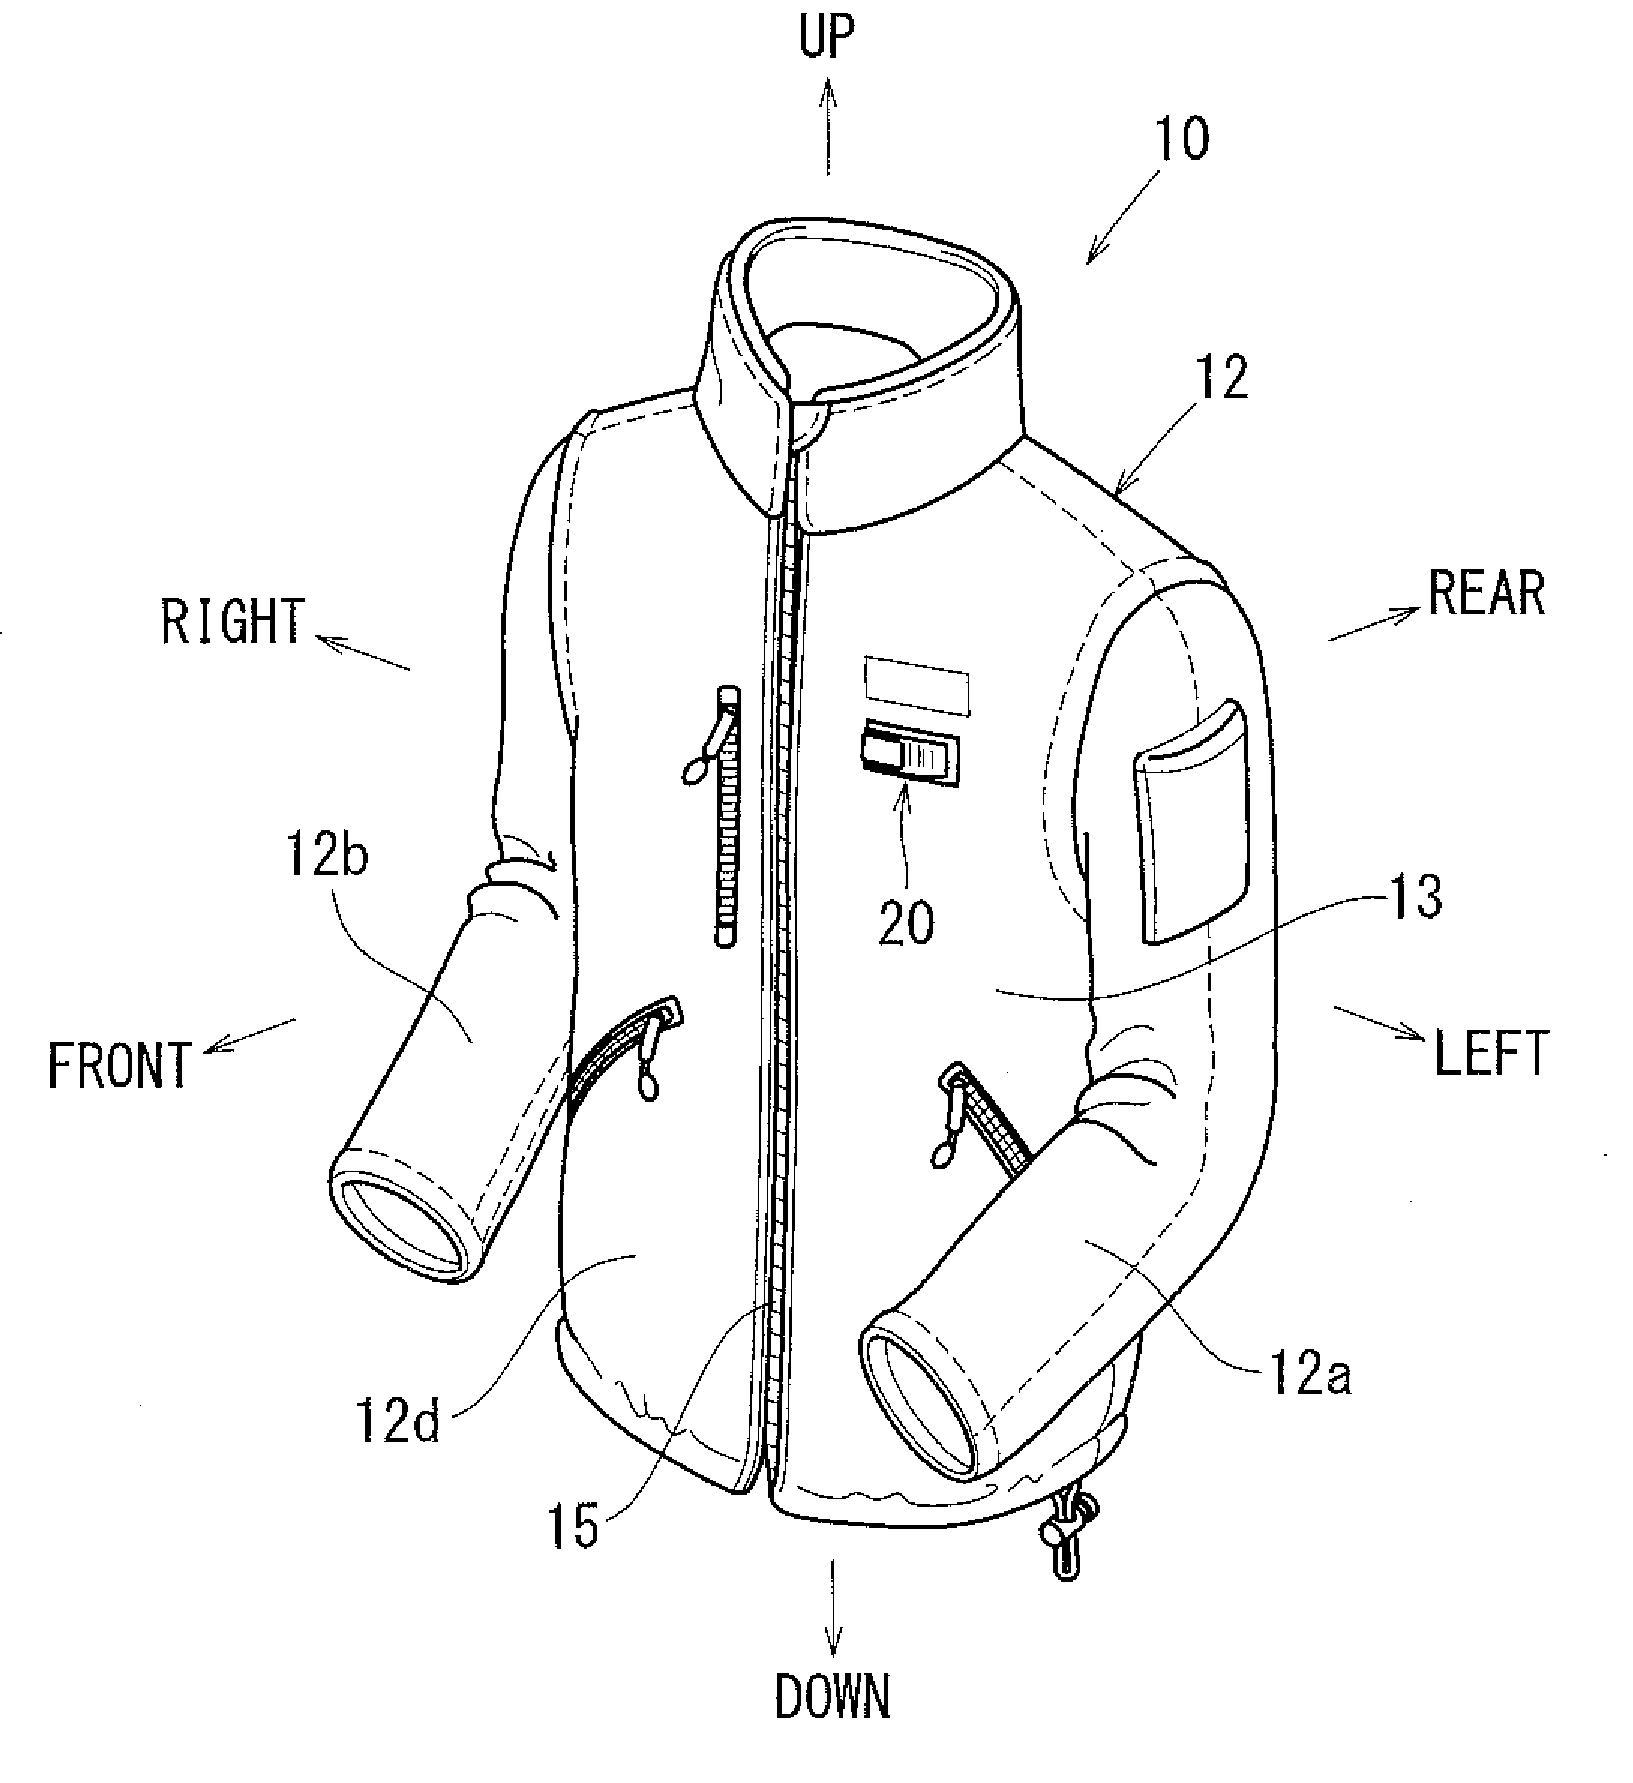 Heat-retaining jacket